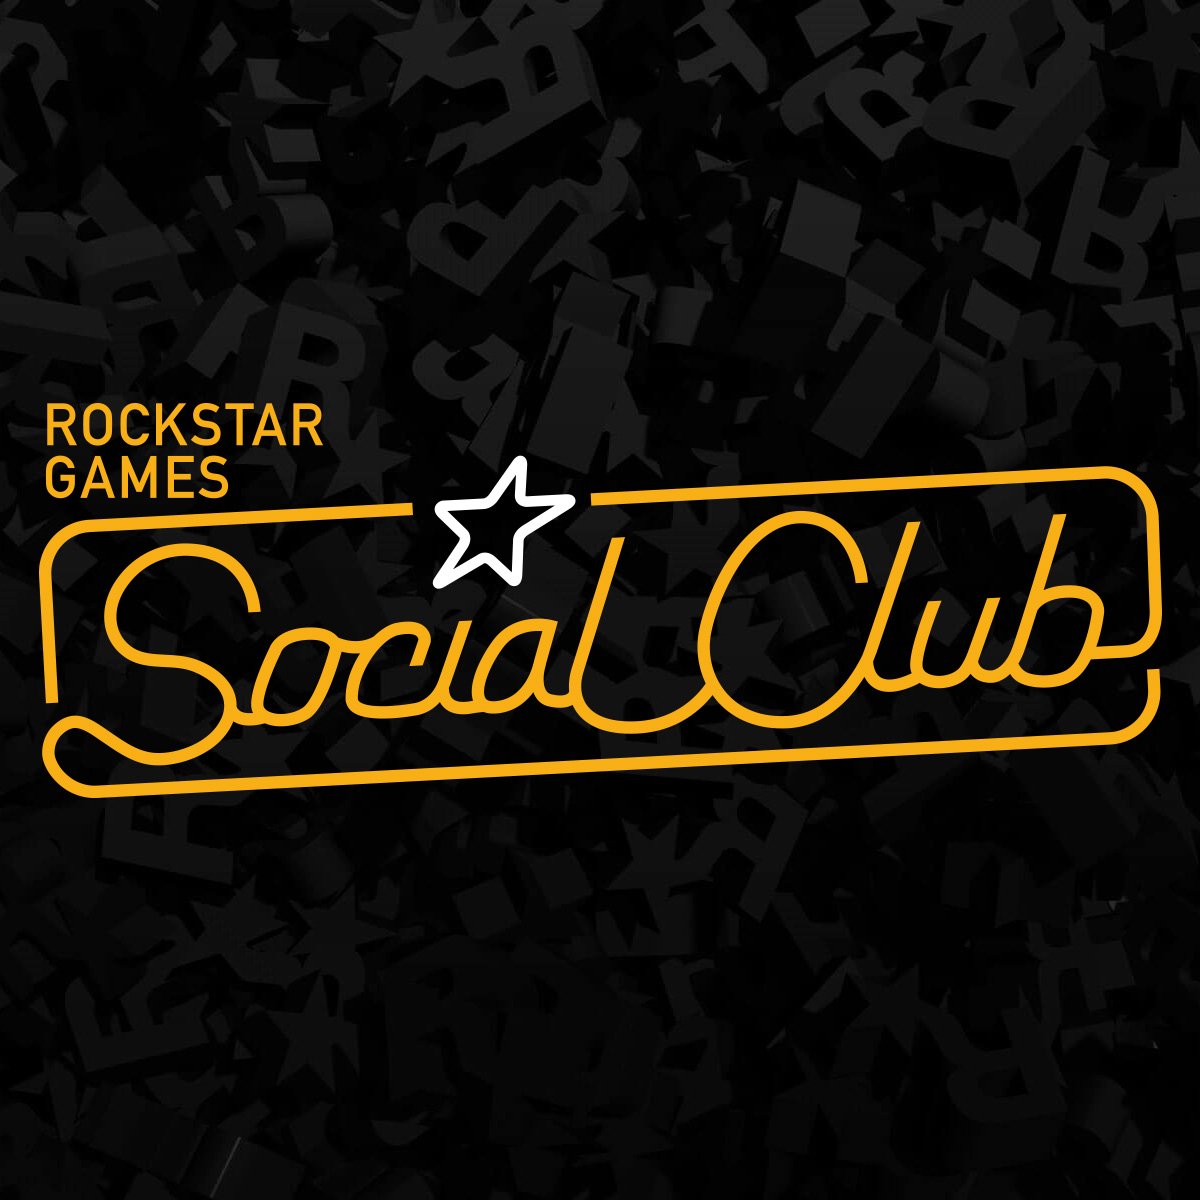 Rockstar games вход. Social Club. Social Club логотип. Rockstar social Club. Social Club игры.